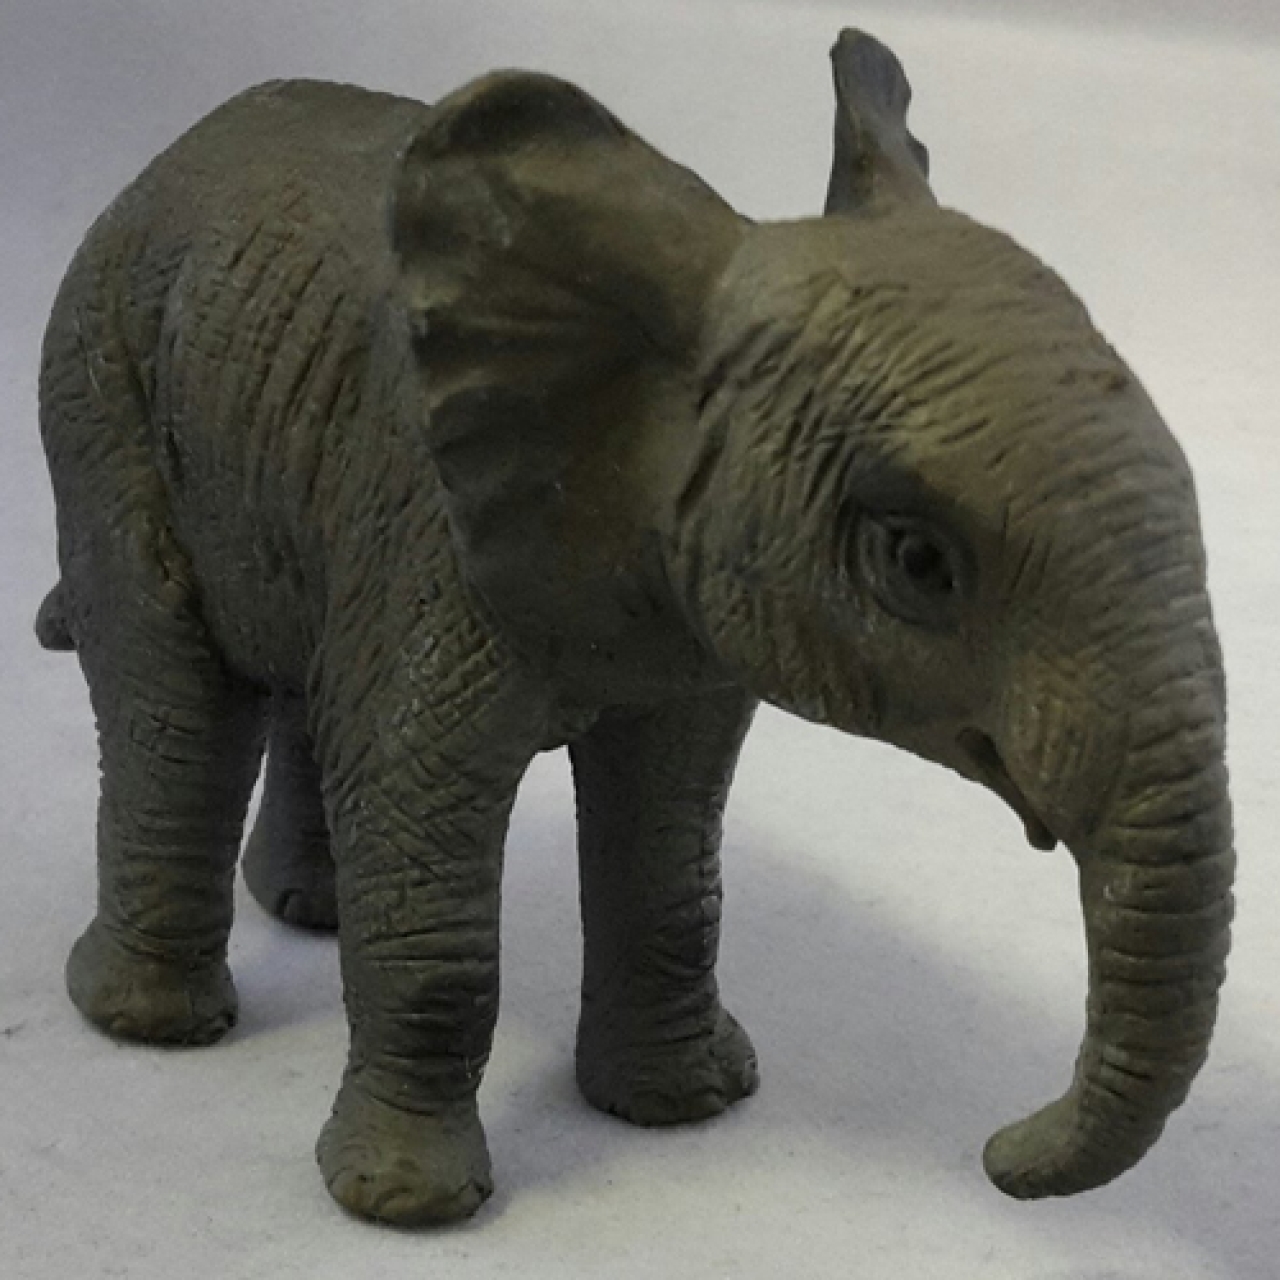 Tortenfigur "Elefant", 6,5 cm